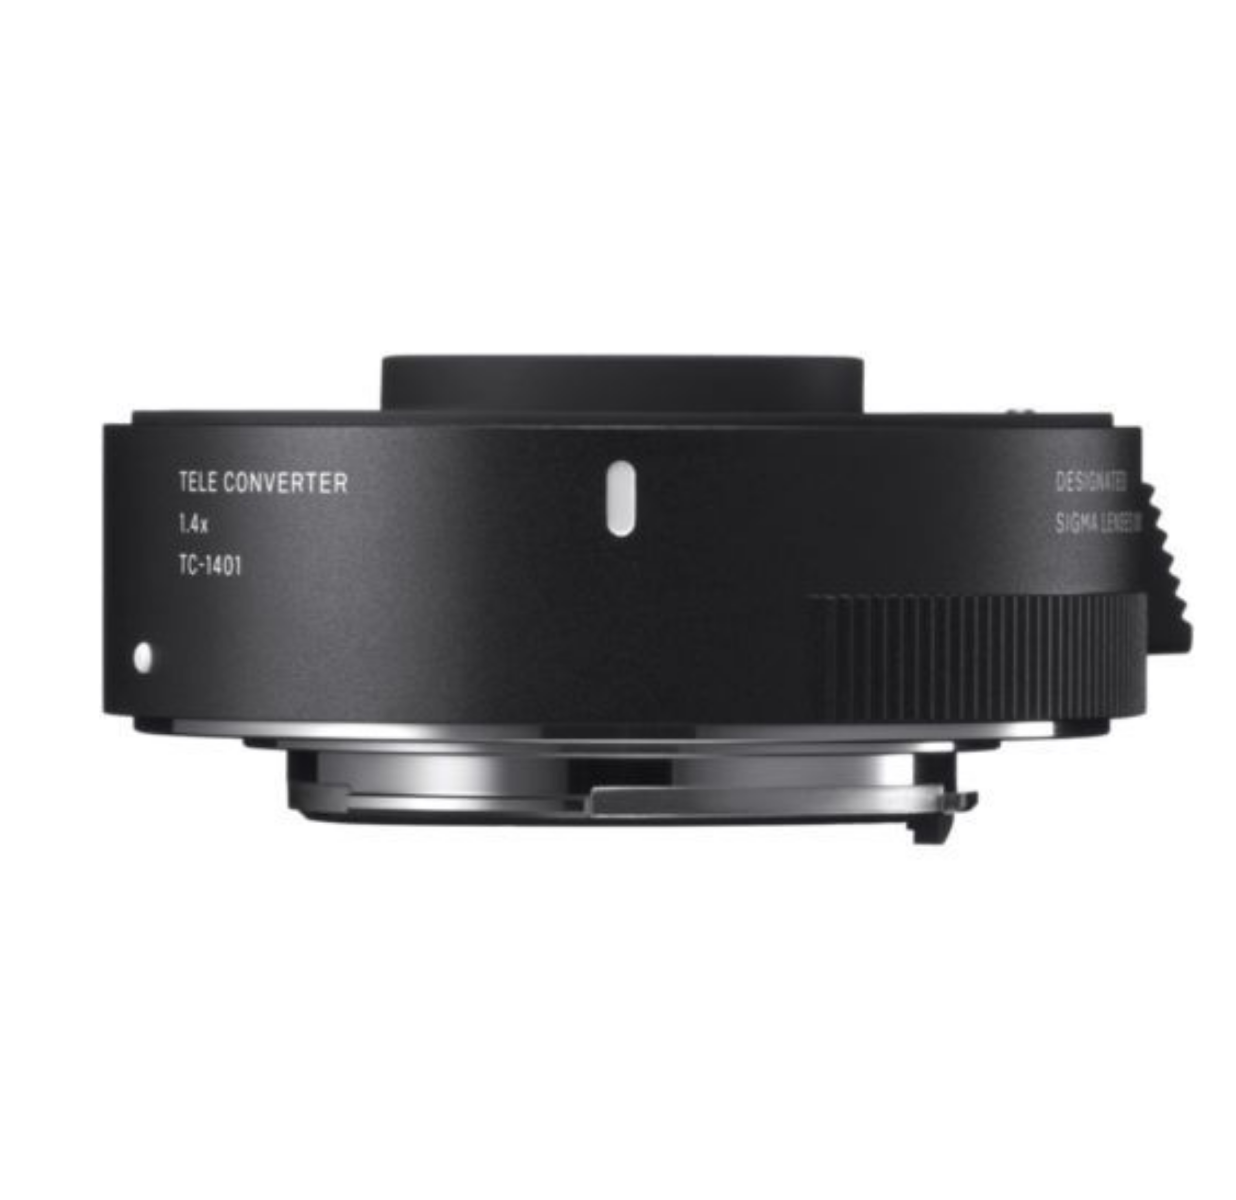 Product Image of Sigma TC-1401 1.4x Teleconverter for certain Nikon mount Sigma lenses